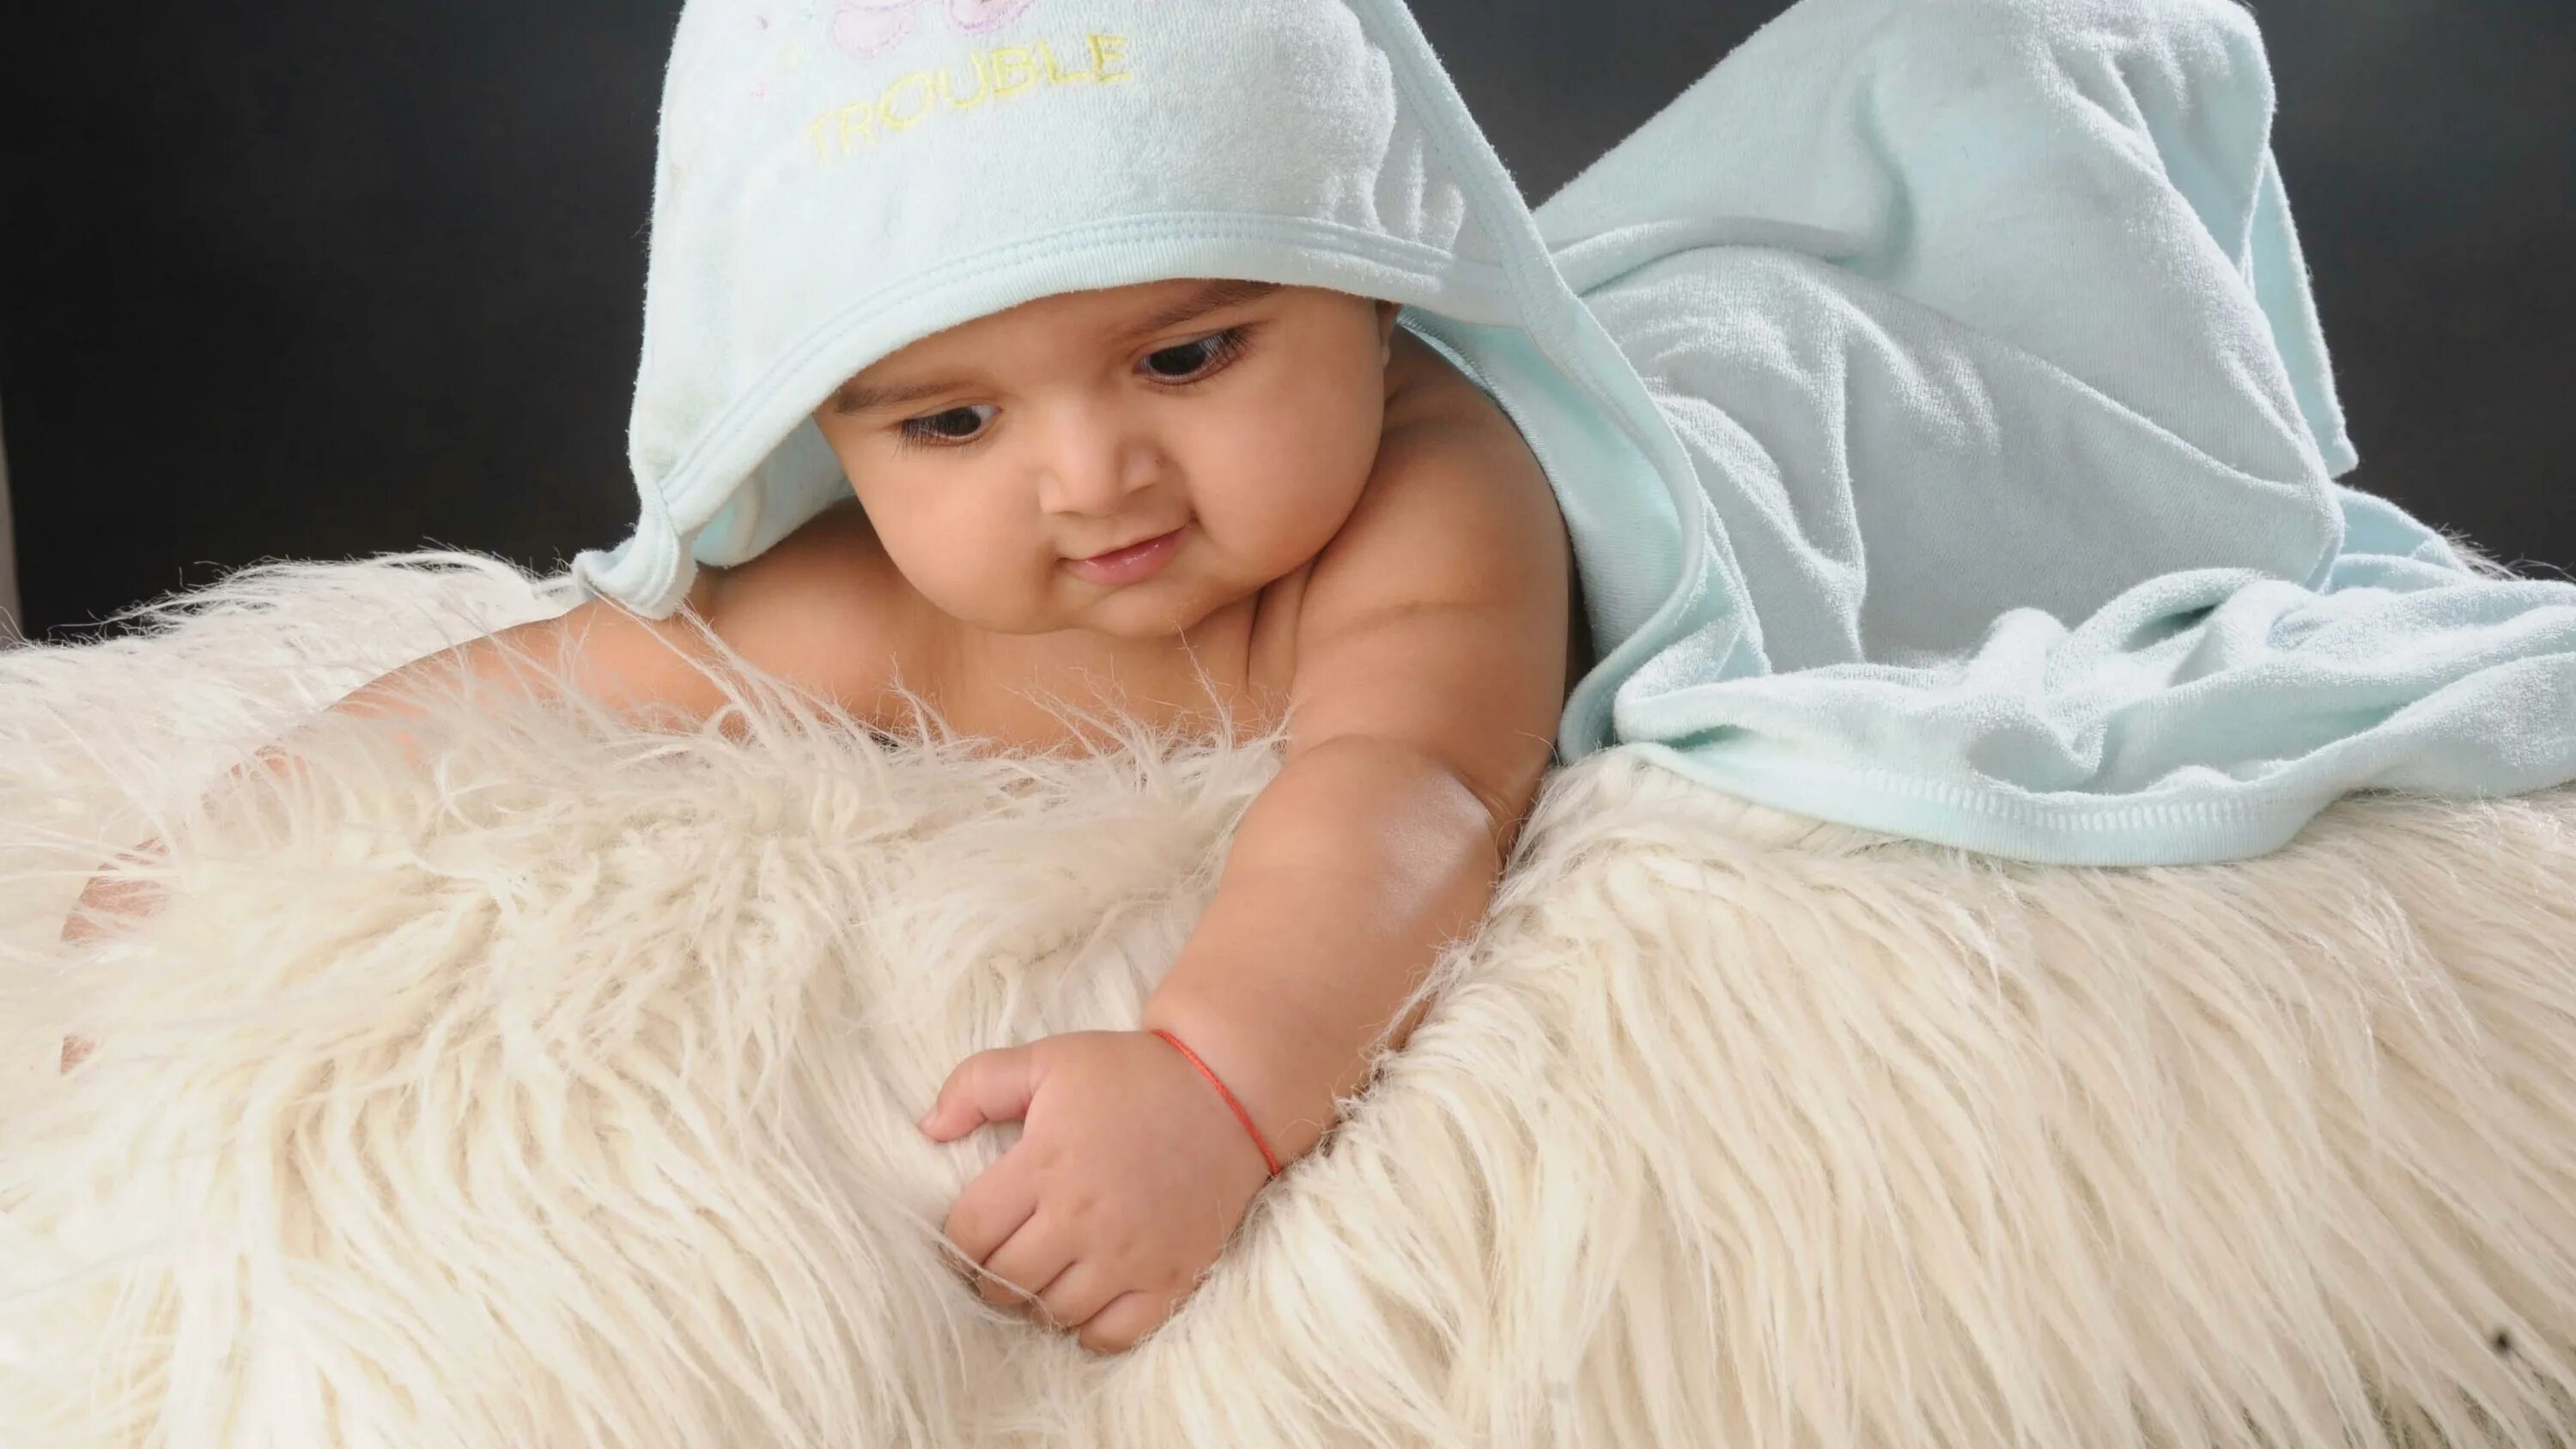 Baby cute певица. Милые дети. Фото бейби. Cute Baby. Девушка в махровом халате.